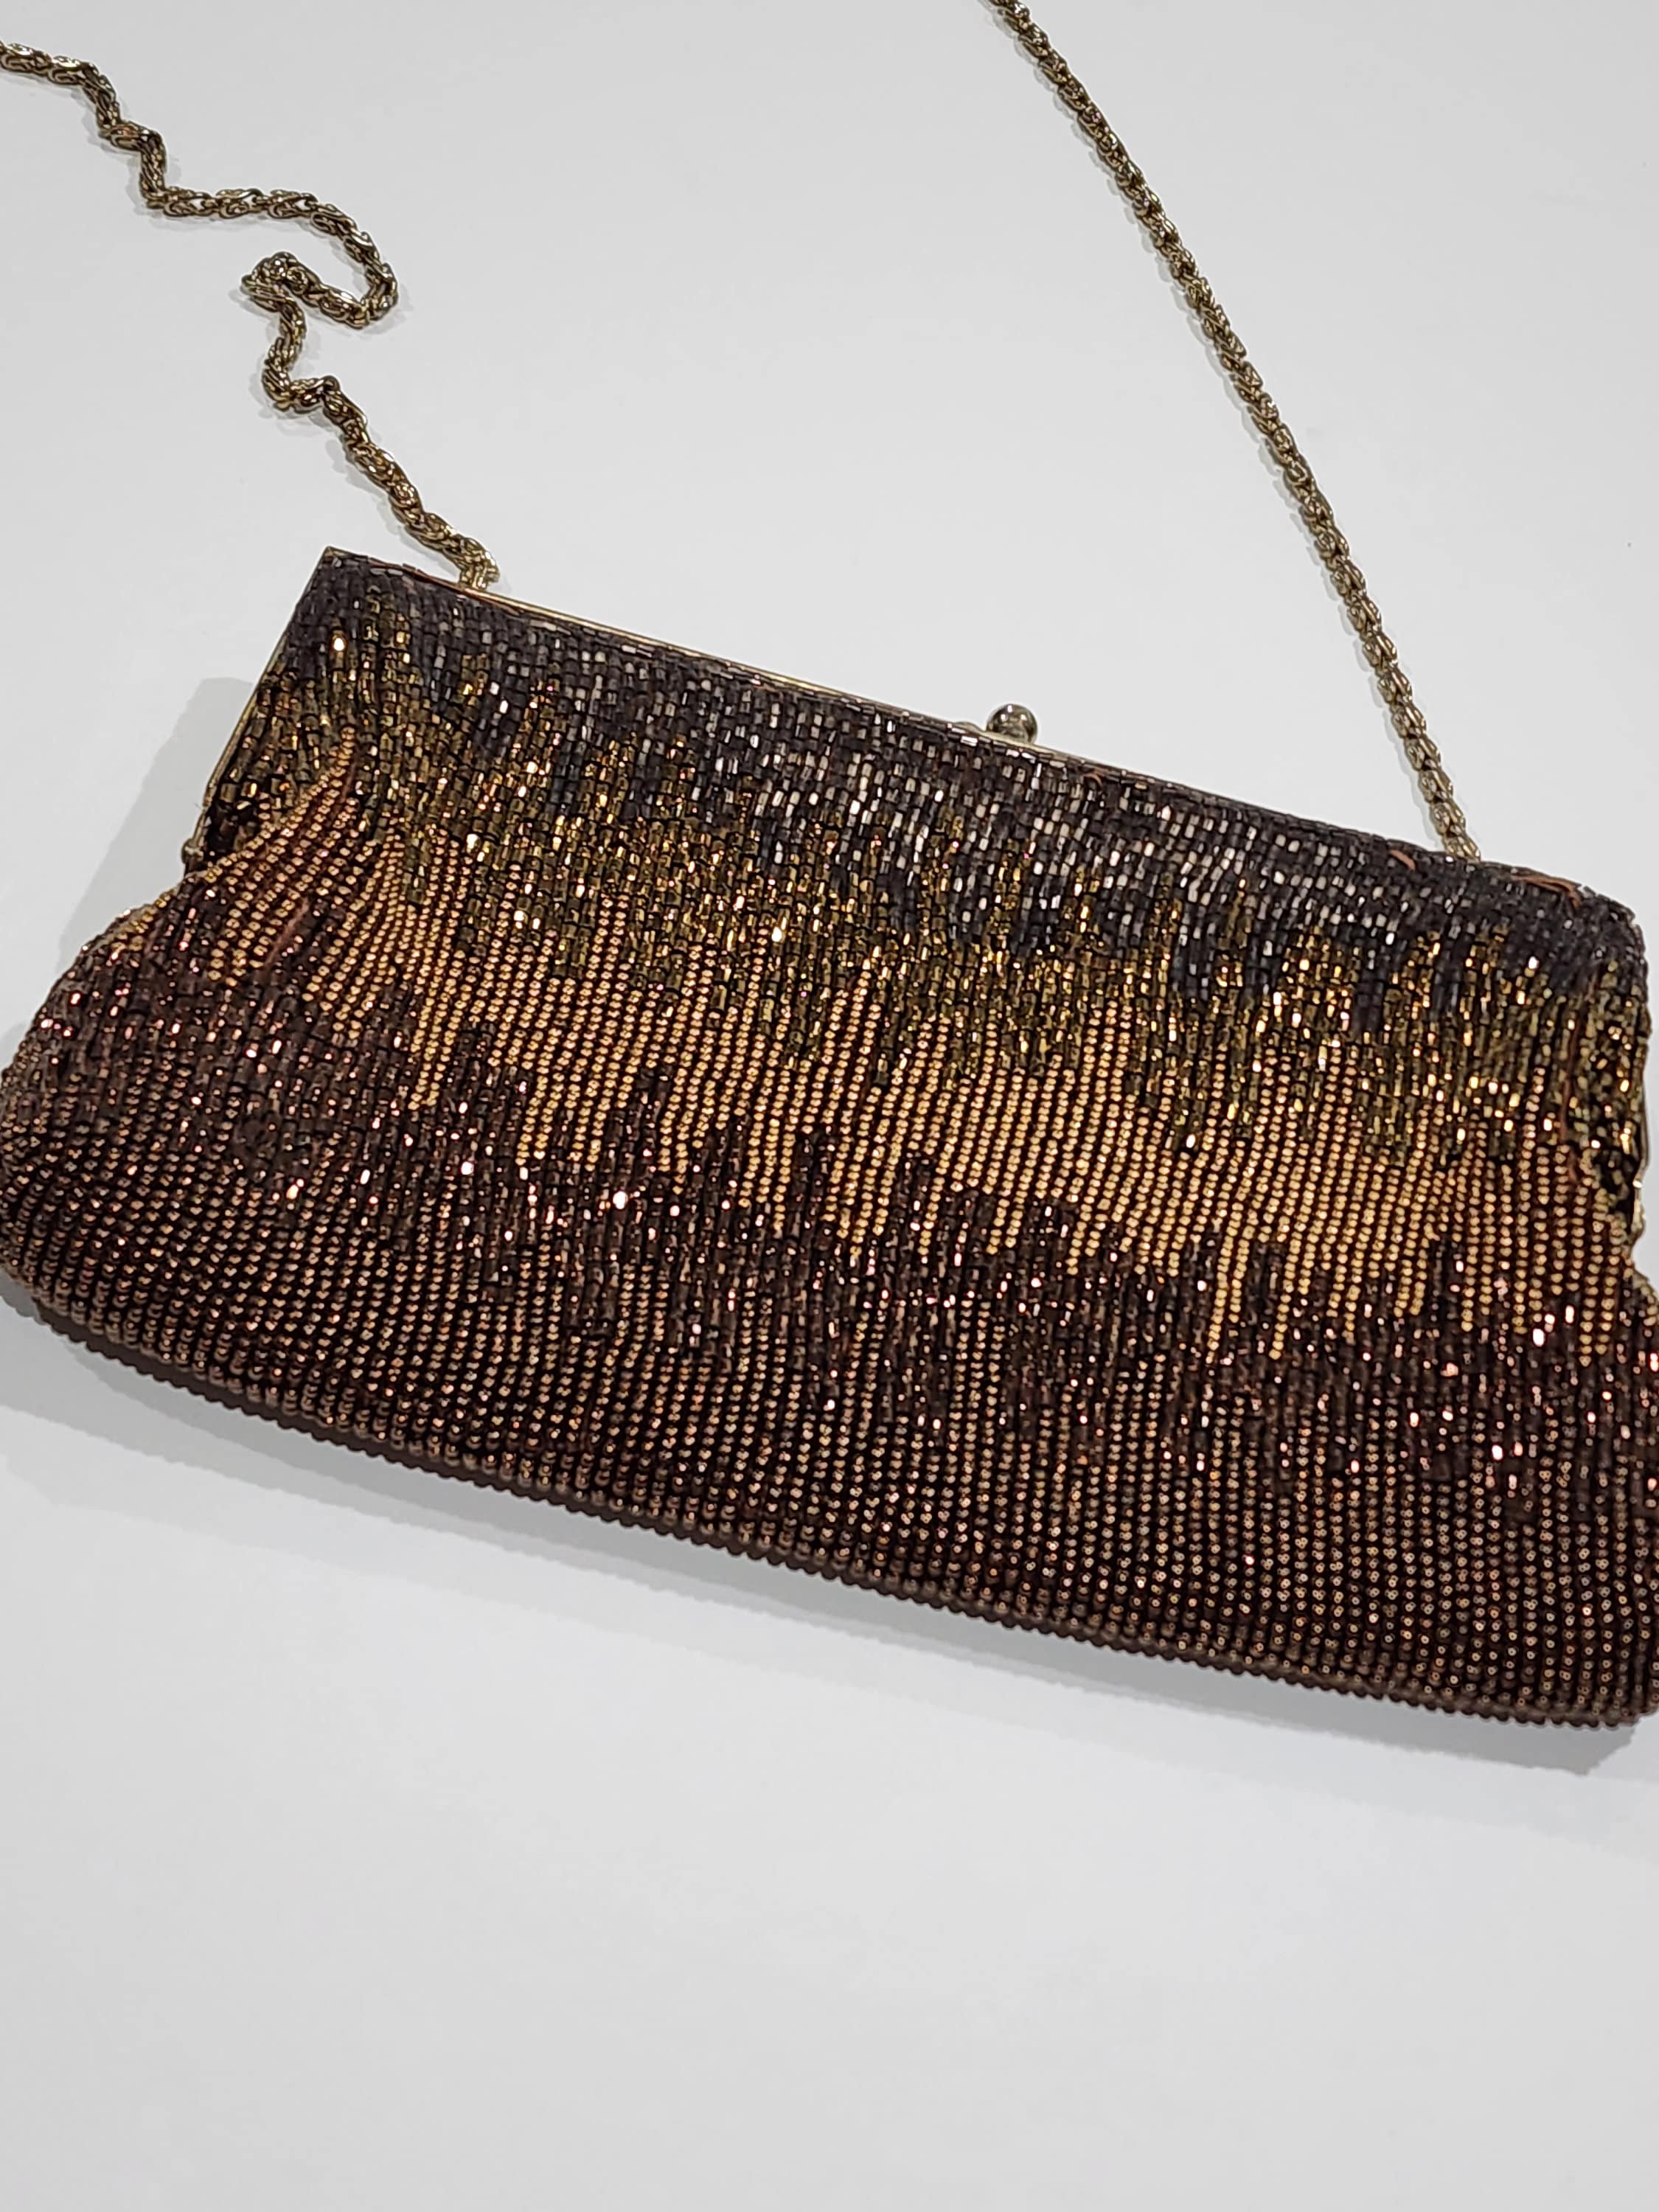 Vintage Gold Bronze Sequin Evening Bag Handbag Purse